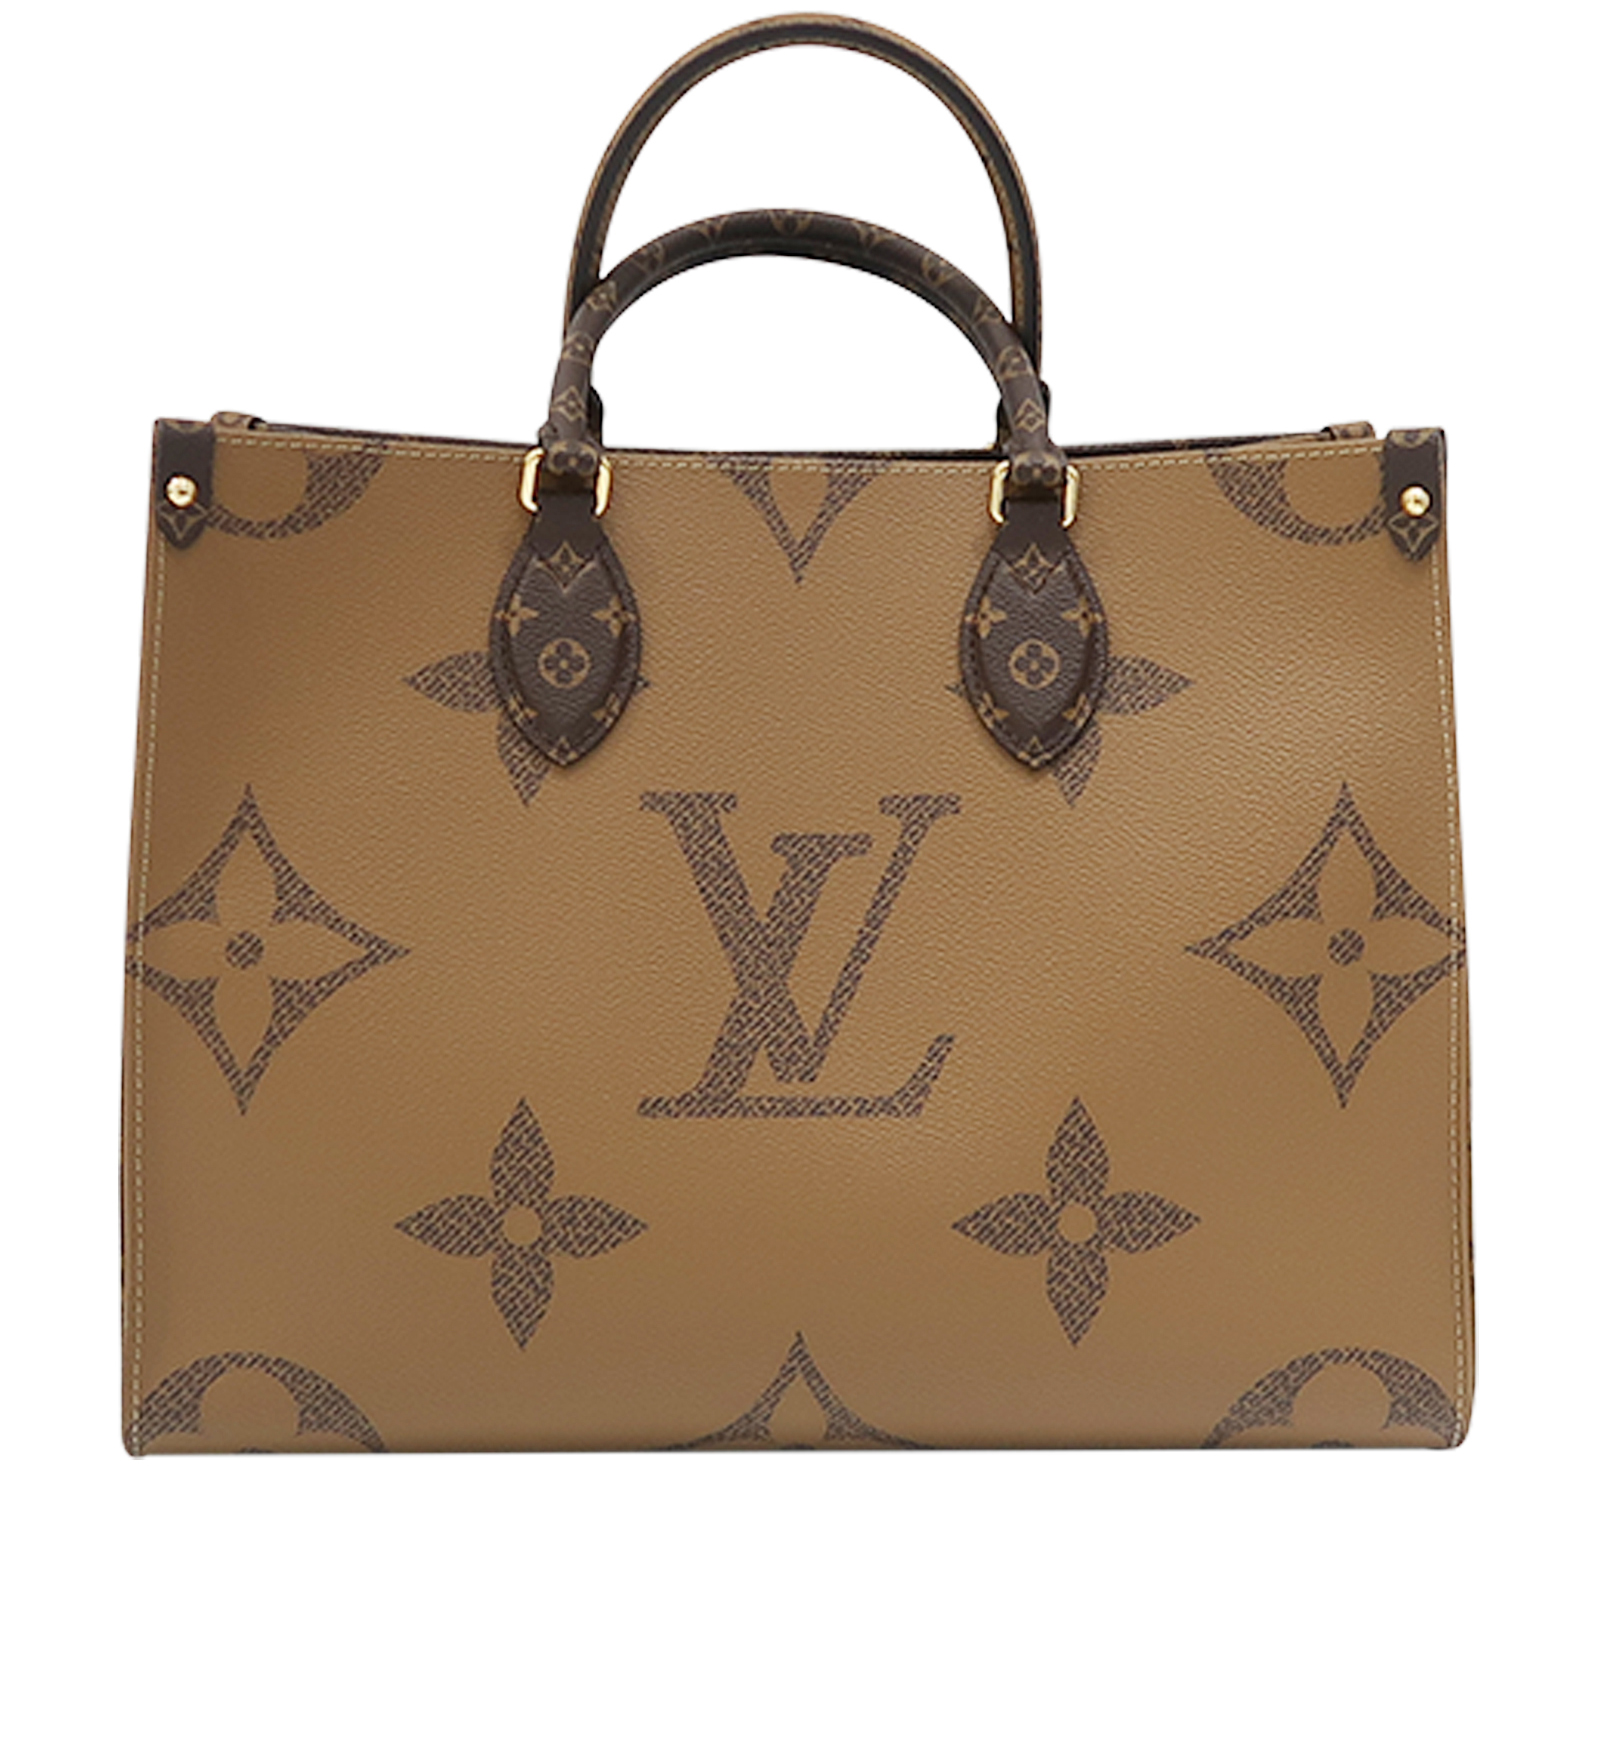 Designer Exchange Ltd - Say hello to our latest Louis Vuitton